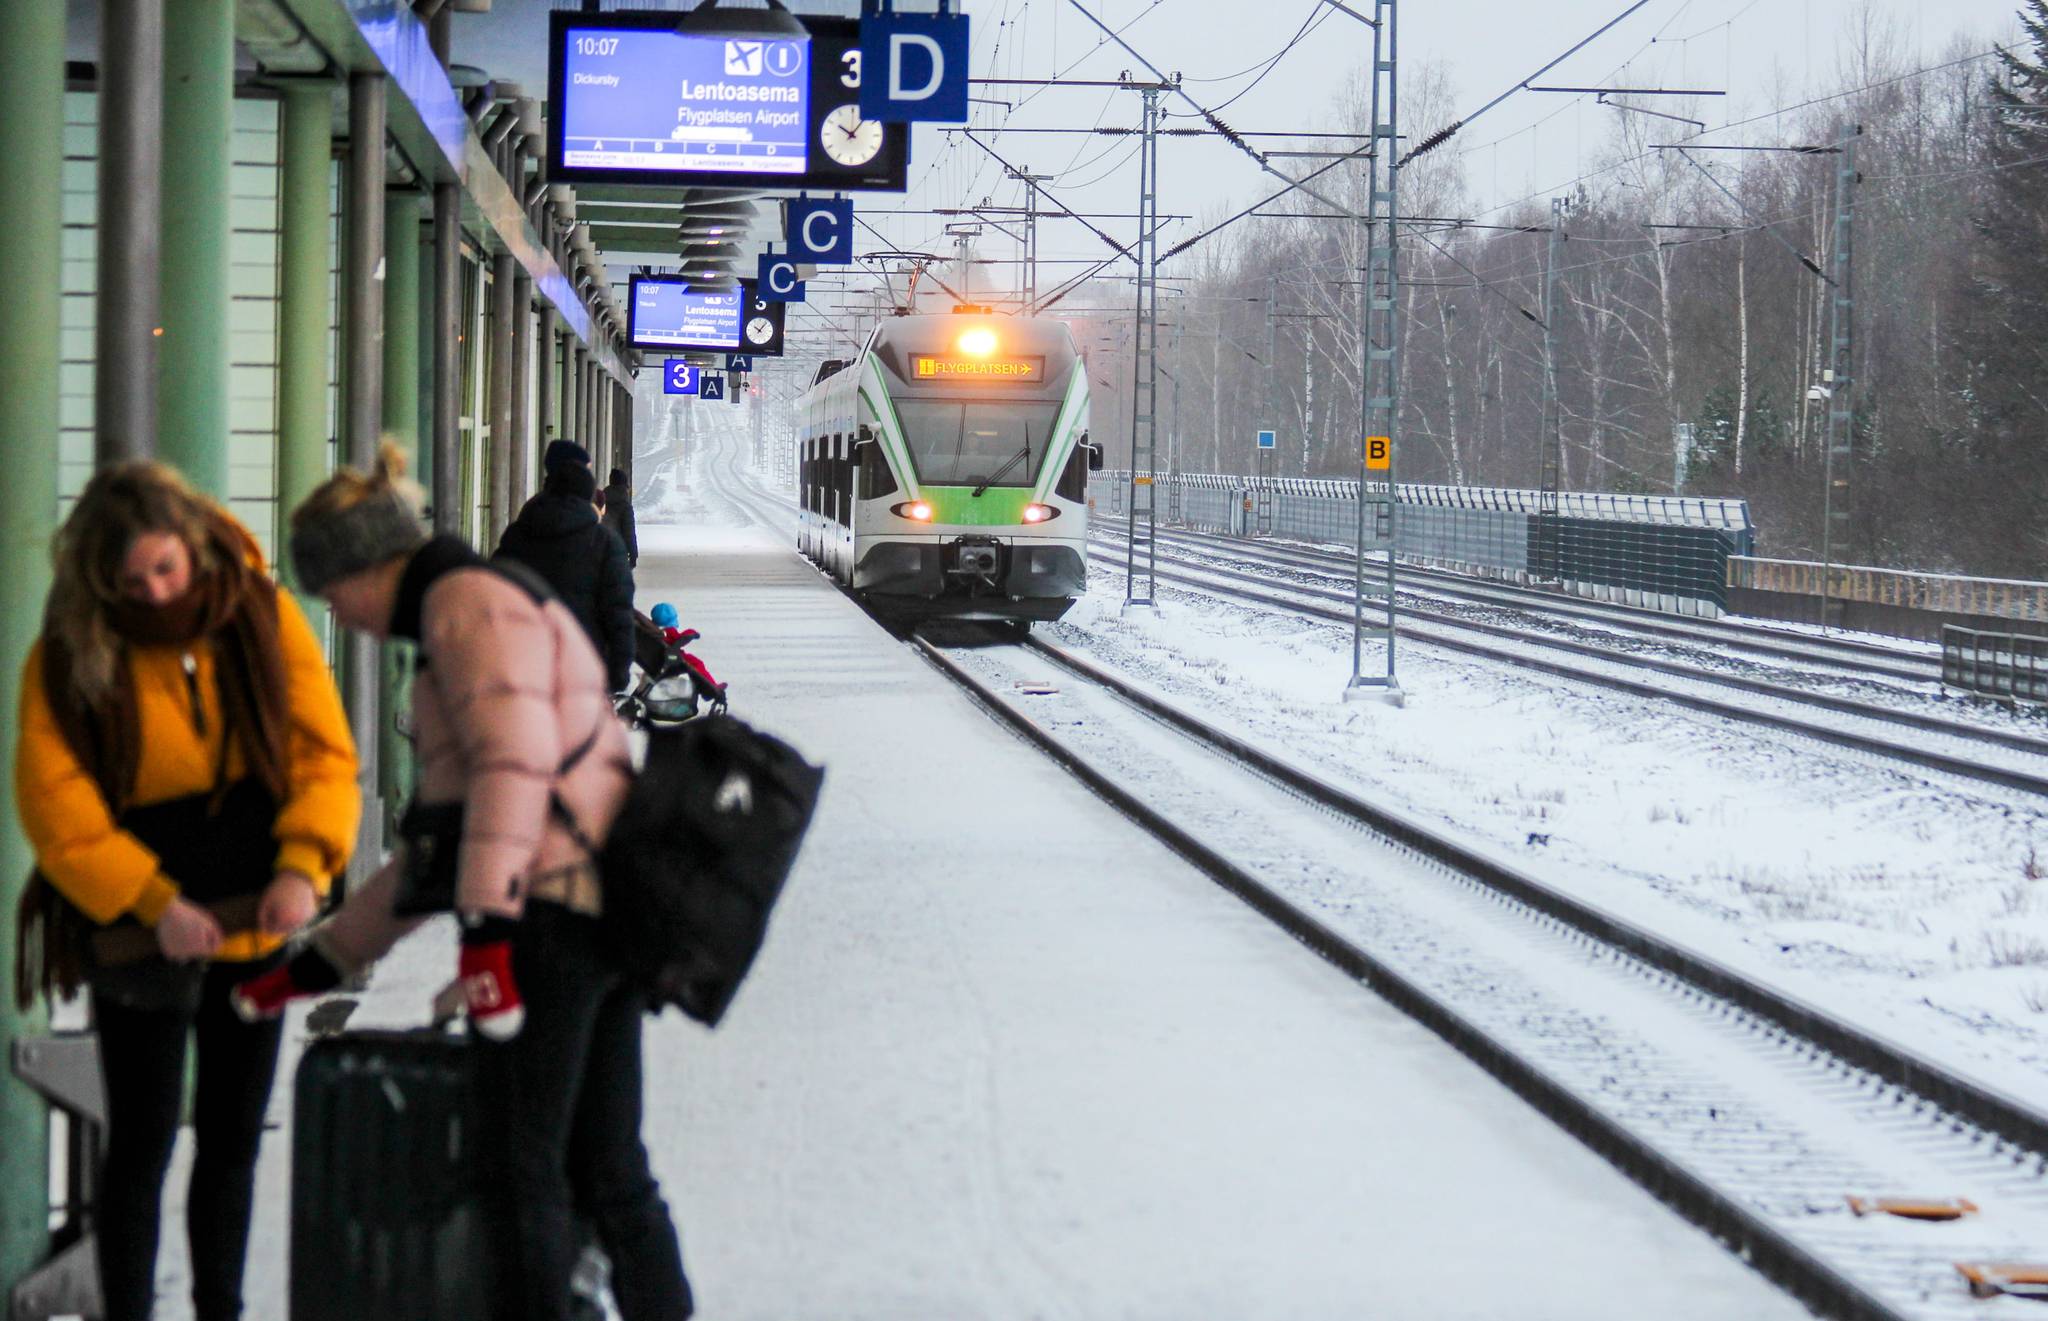 Europe’s budding night train network thrills travellers